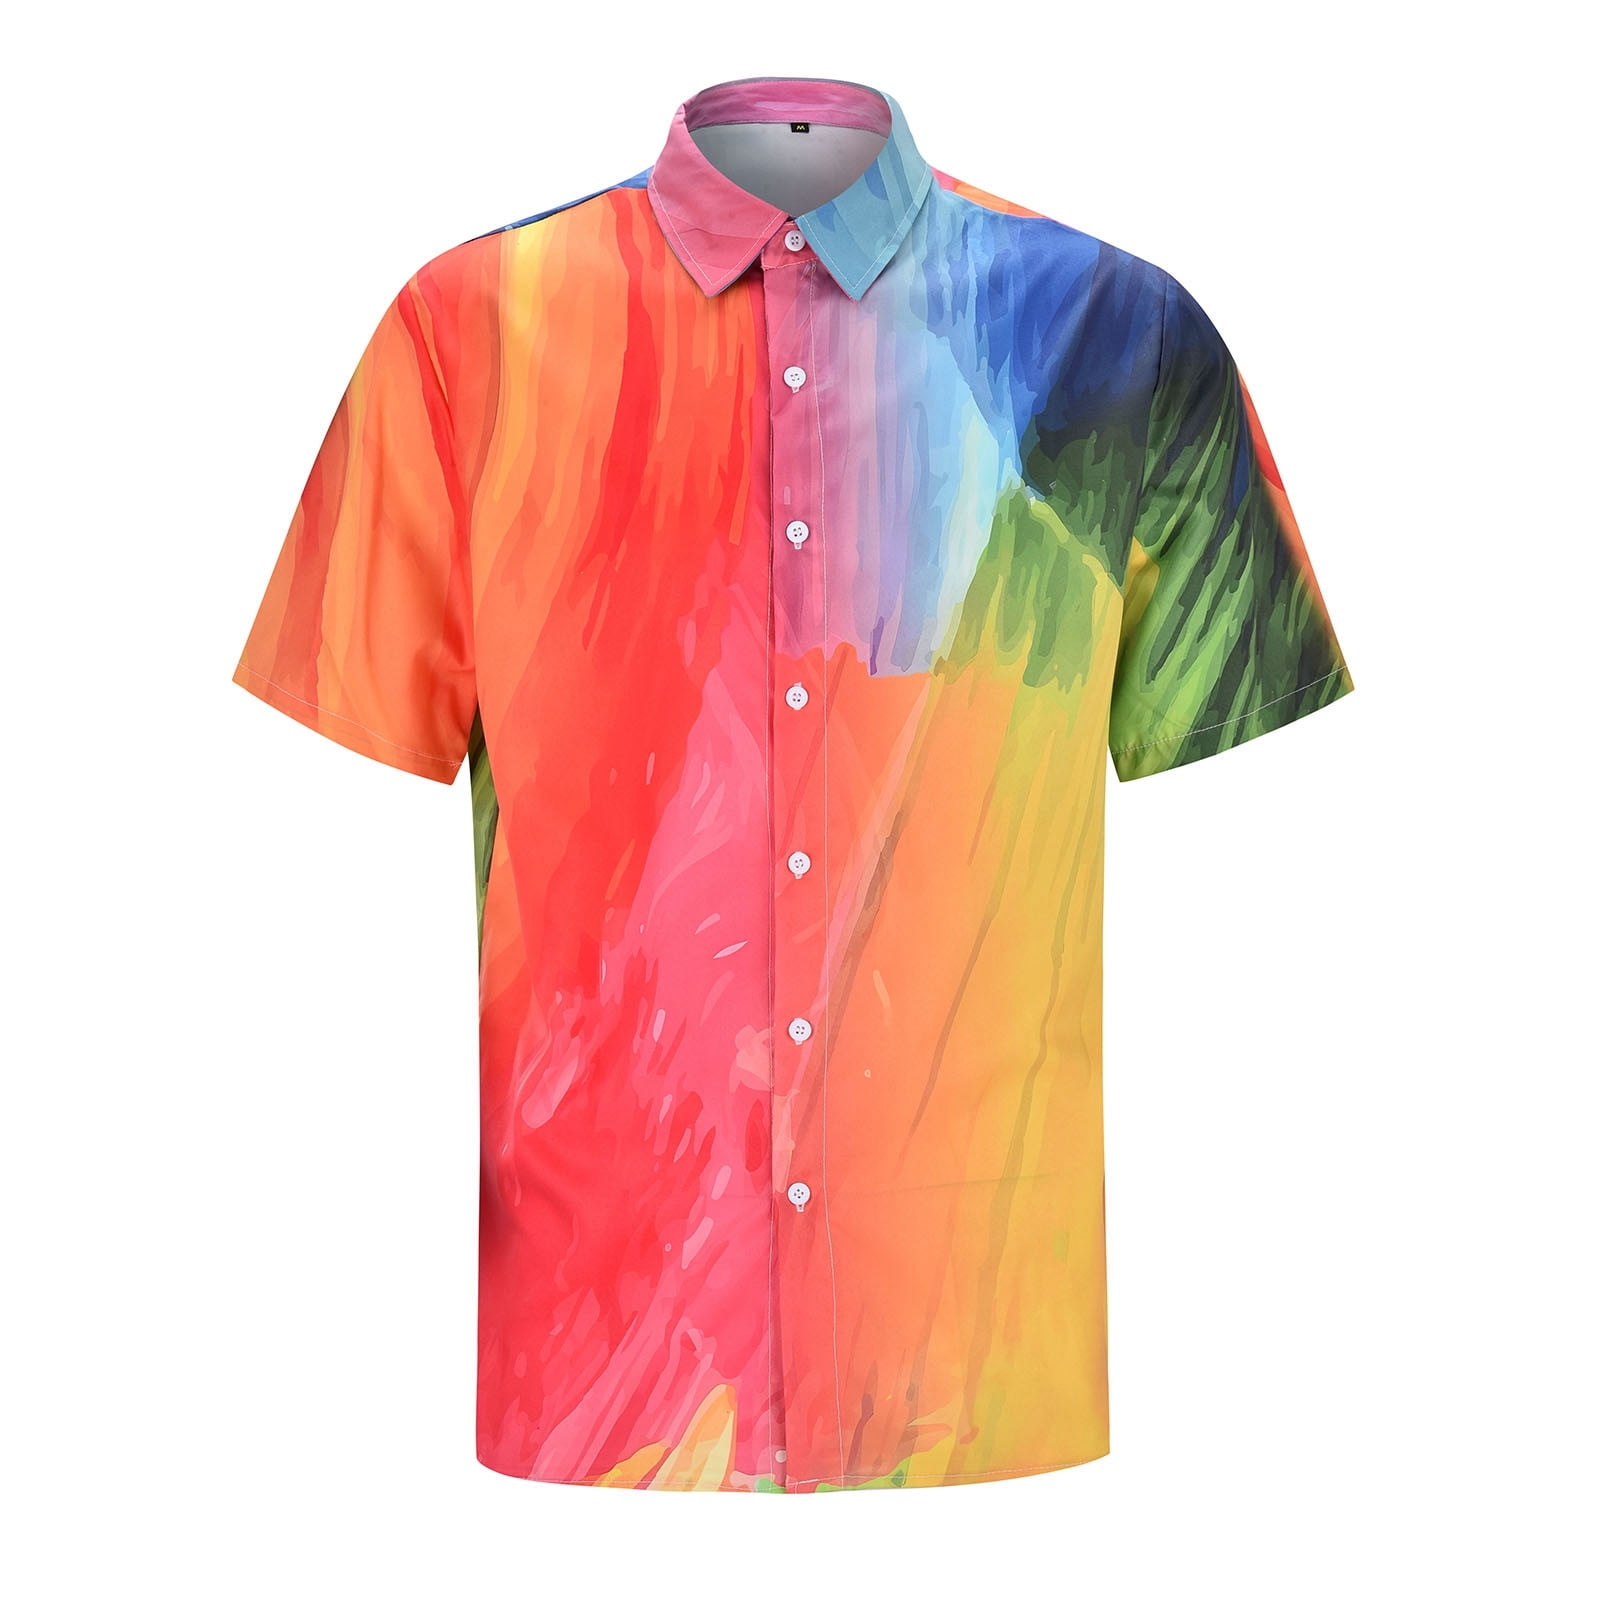 AdBFJAF Mens Shirts Graphic Tees Men's Rainbow Multi Color 3D Digital ...